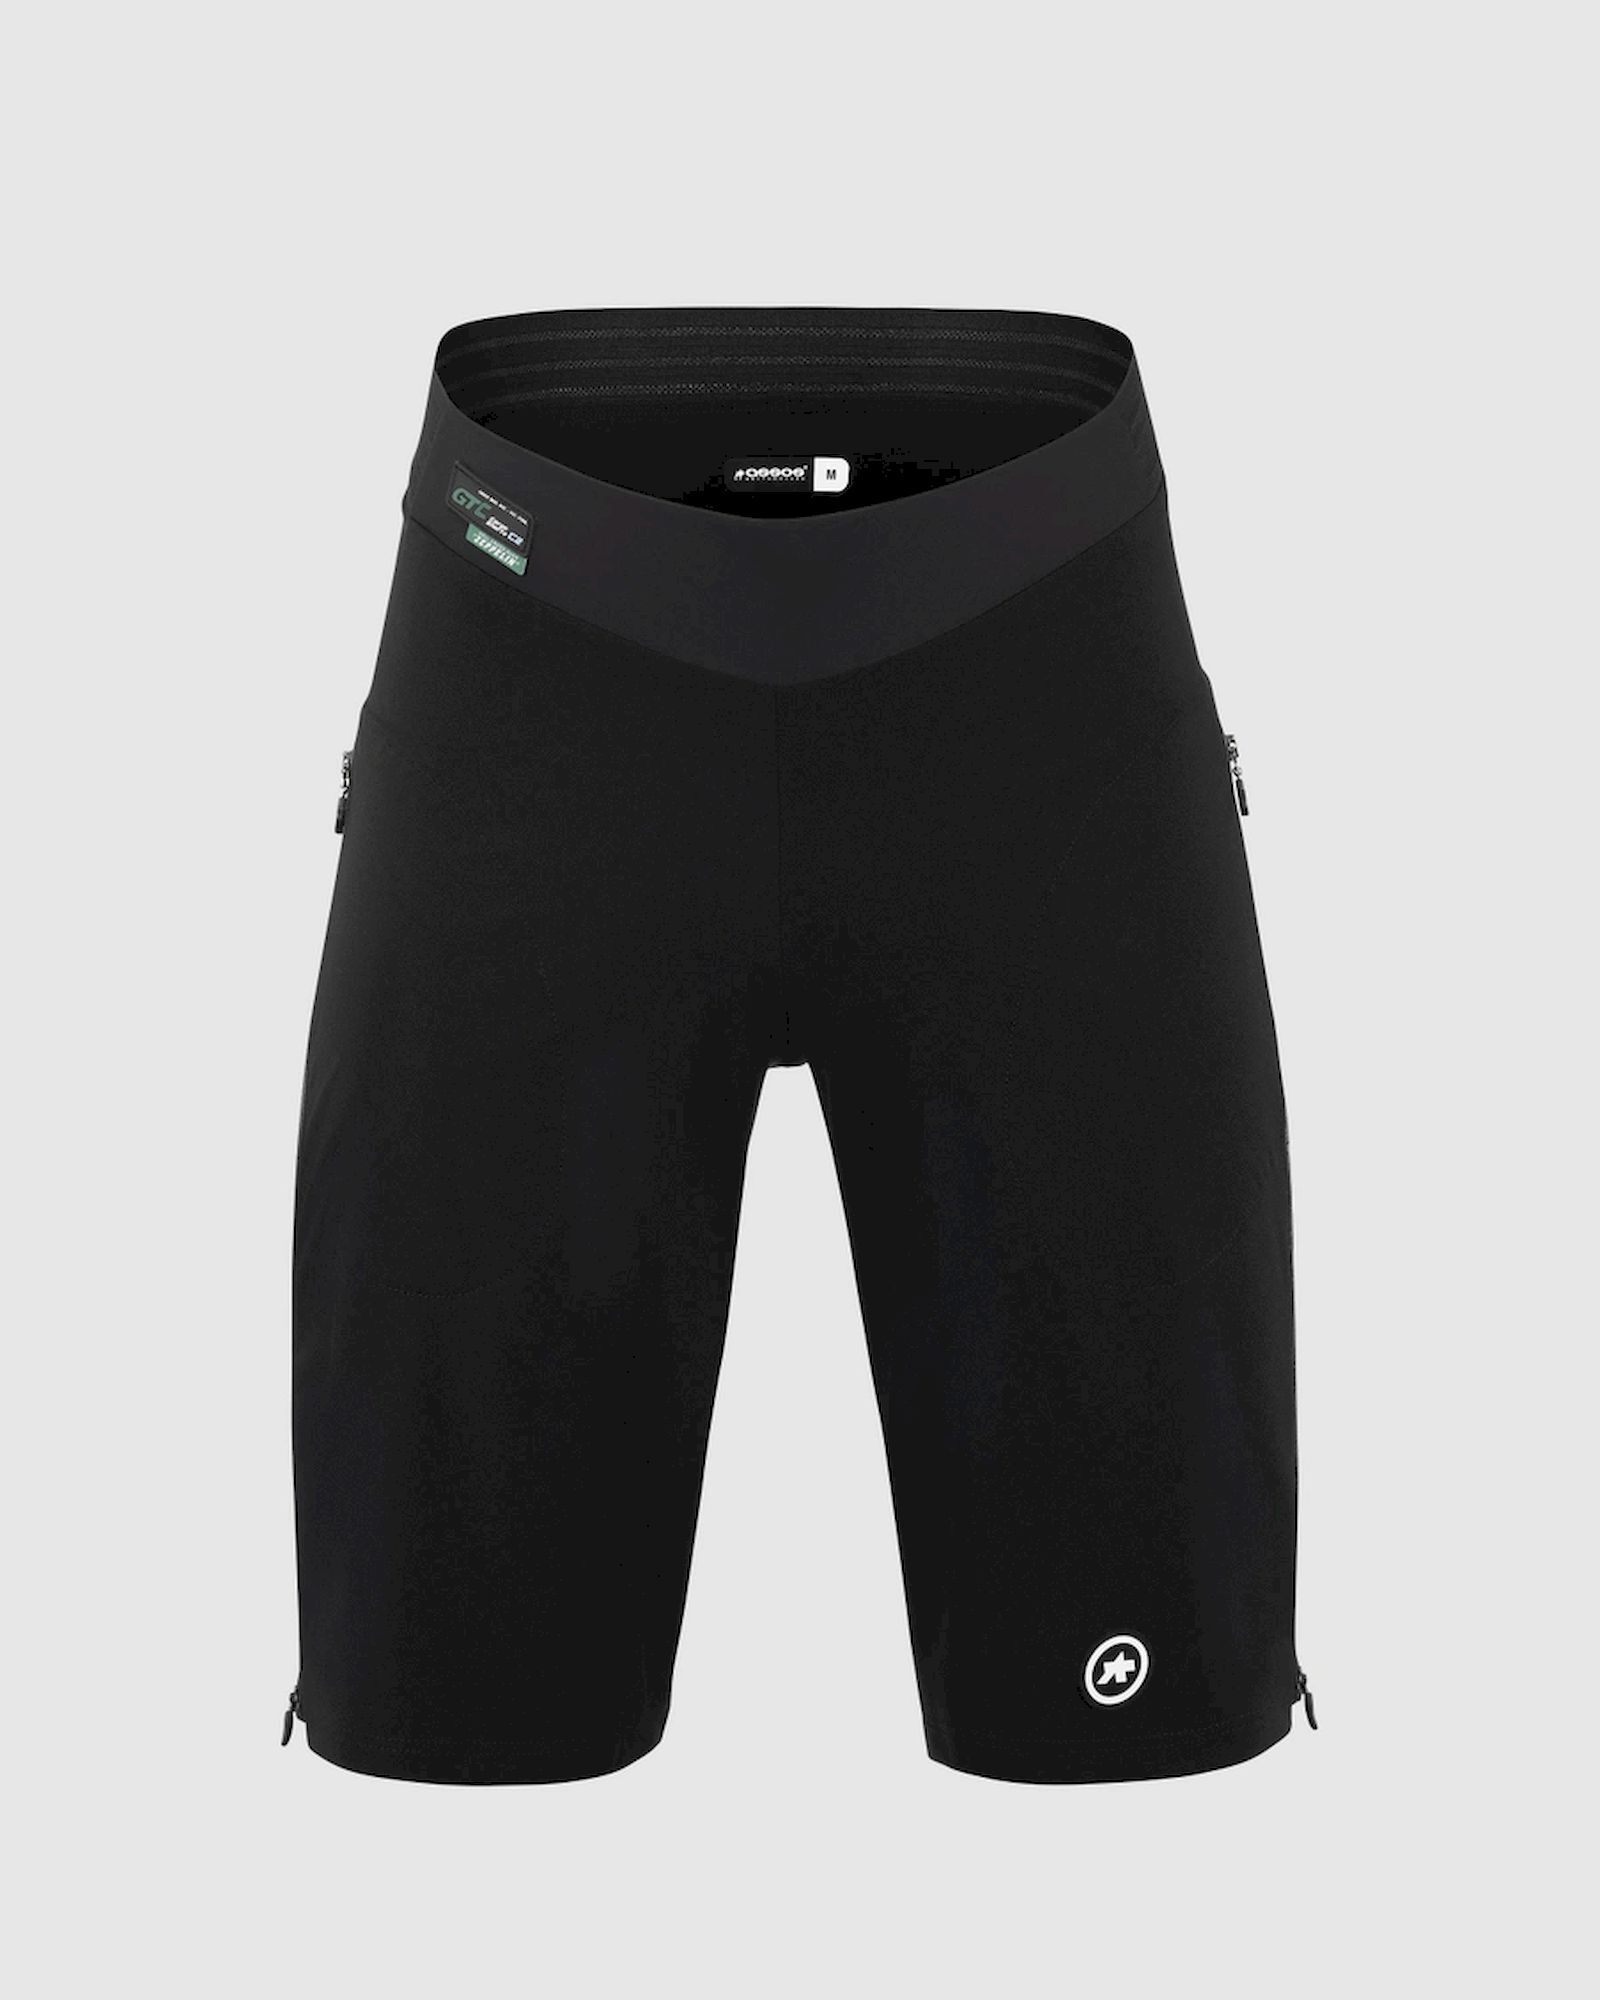 Assos Mille GTC Cargo Shorts C2 - Cycling shorts - Men's | Hardloop